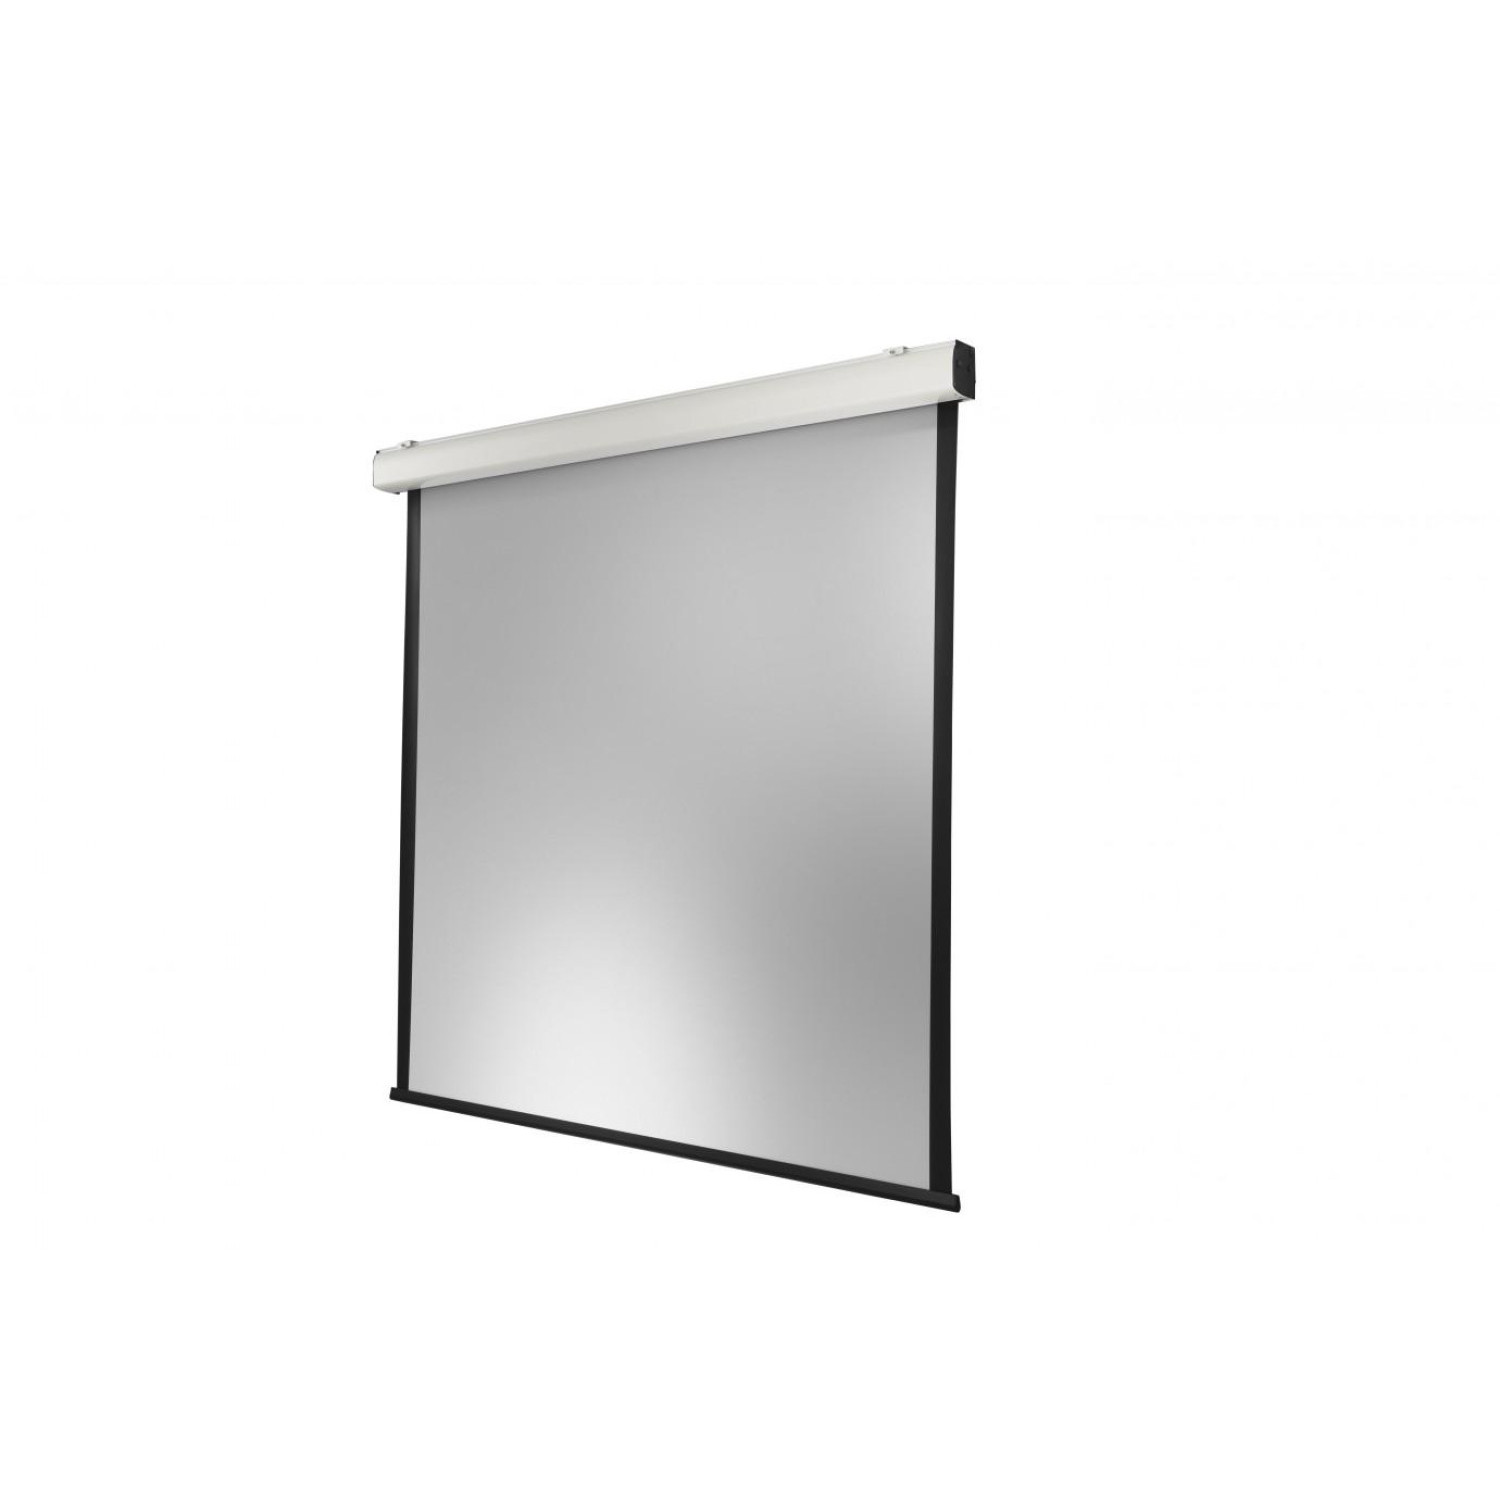 Електрически екран за стена CELEXON Electric Expert XL, 400 x 300 cm, 4:3, matt white, PVC